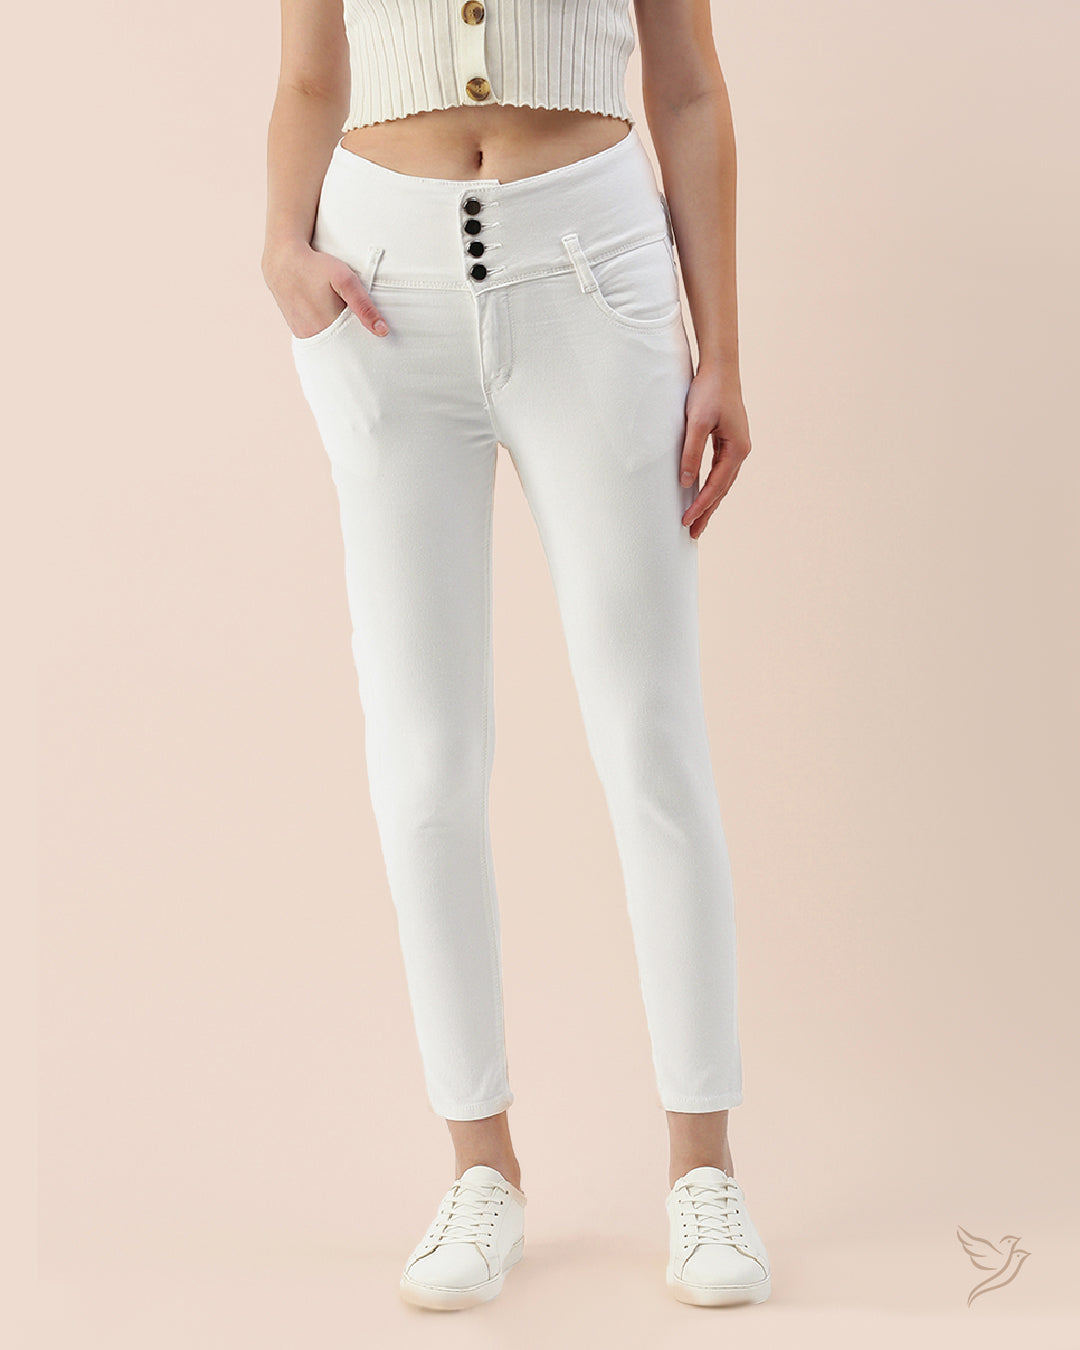 Pearl White Women High Waist Denim Jeans